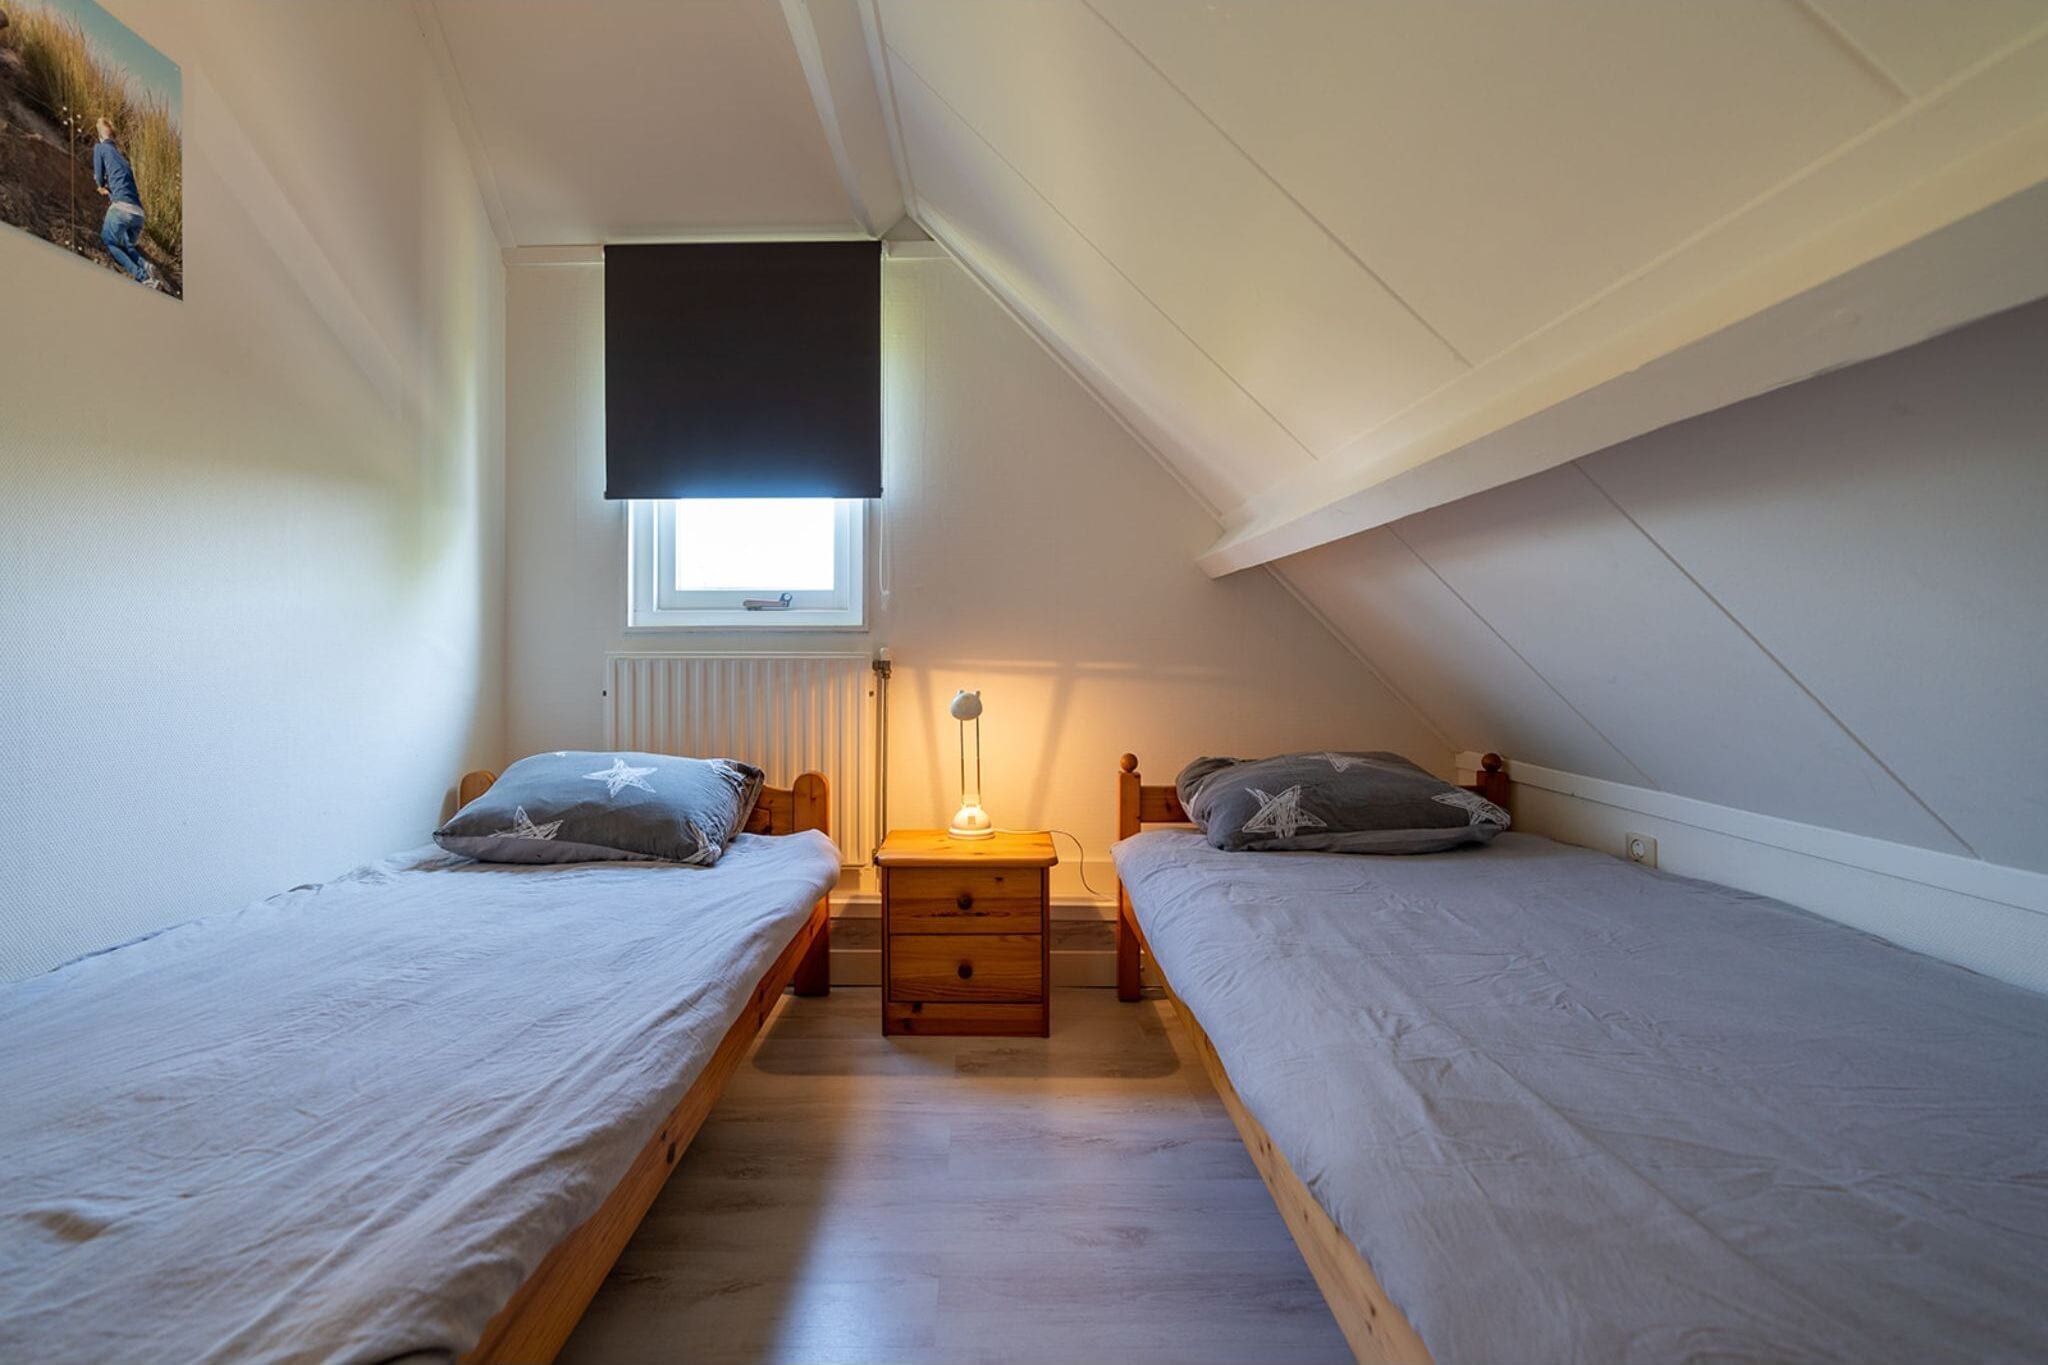 Komfortables, renoviertes Ferienhaus in Meeresnähe